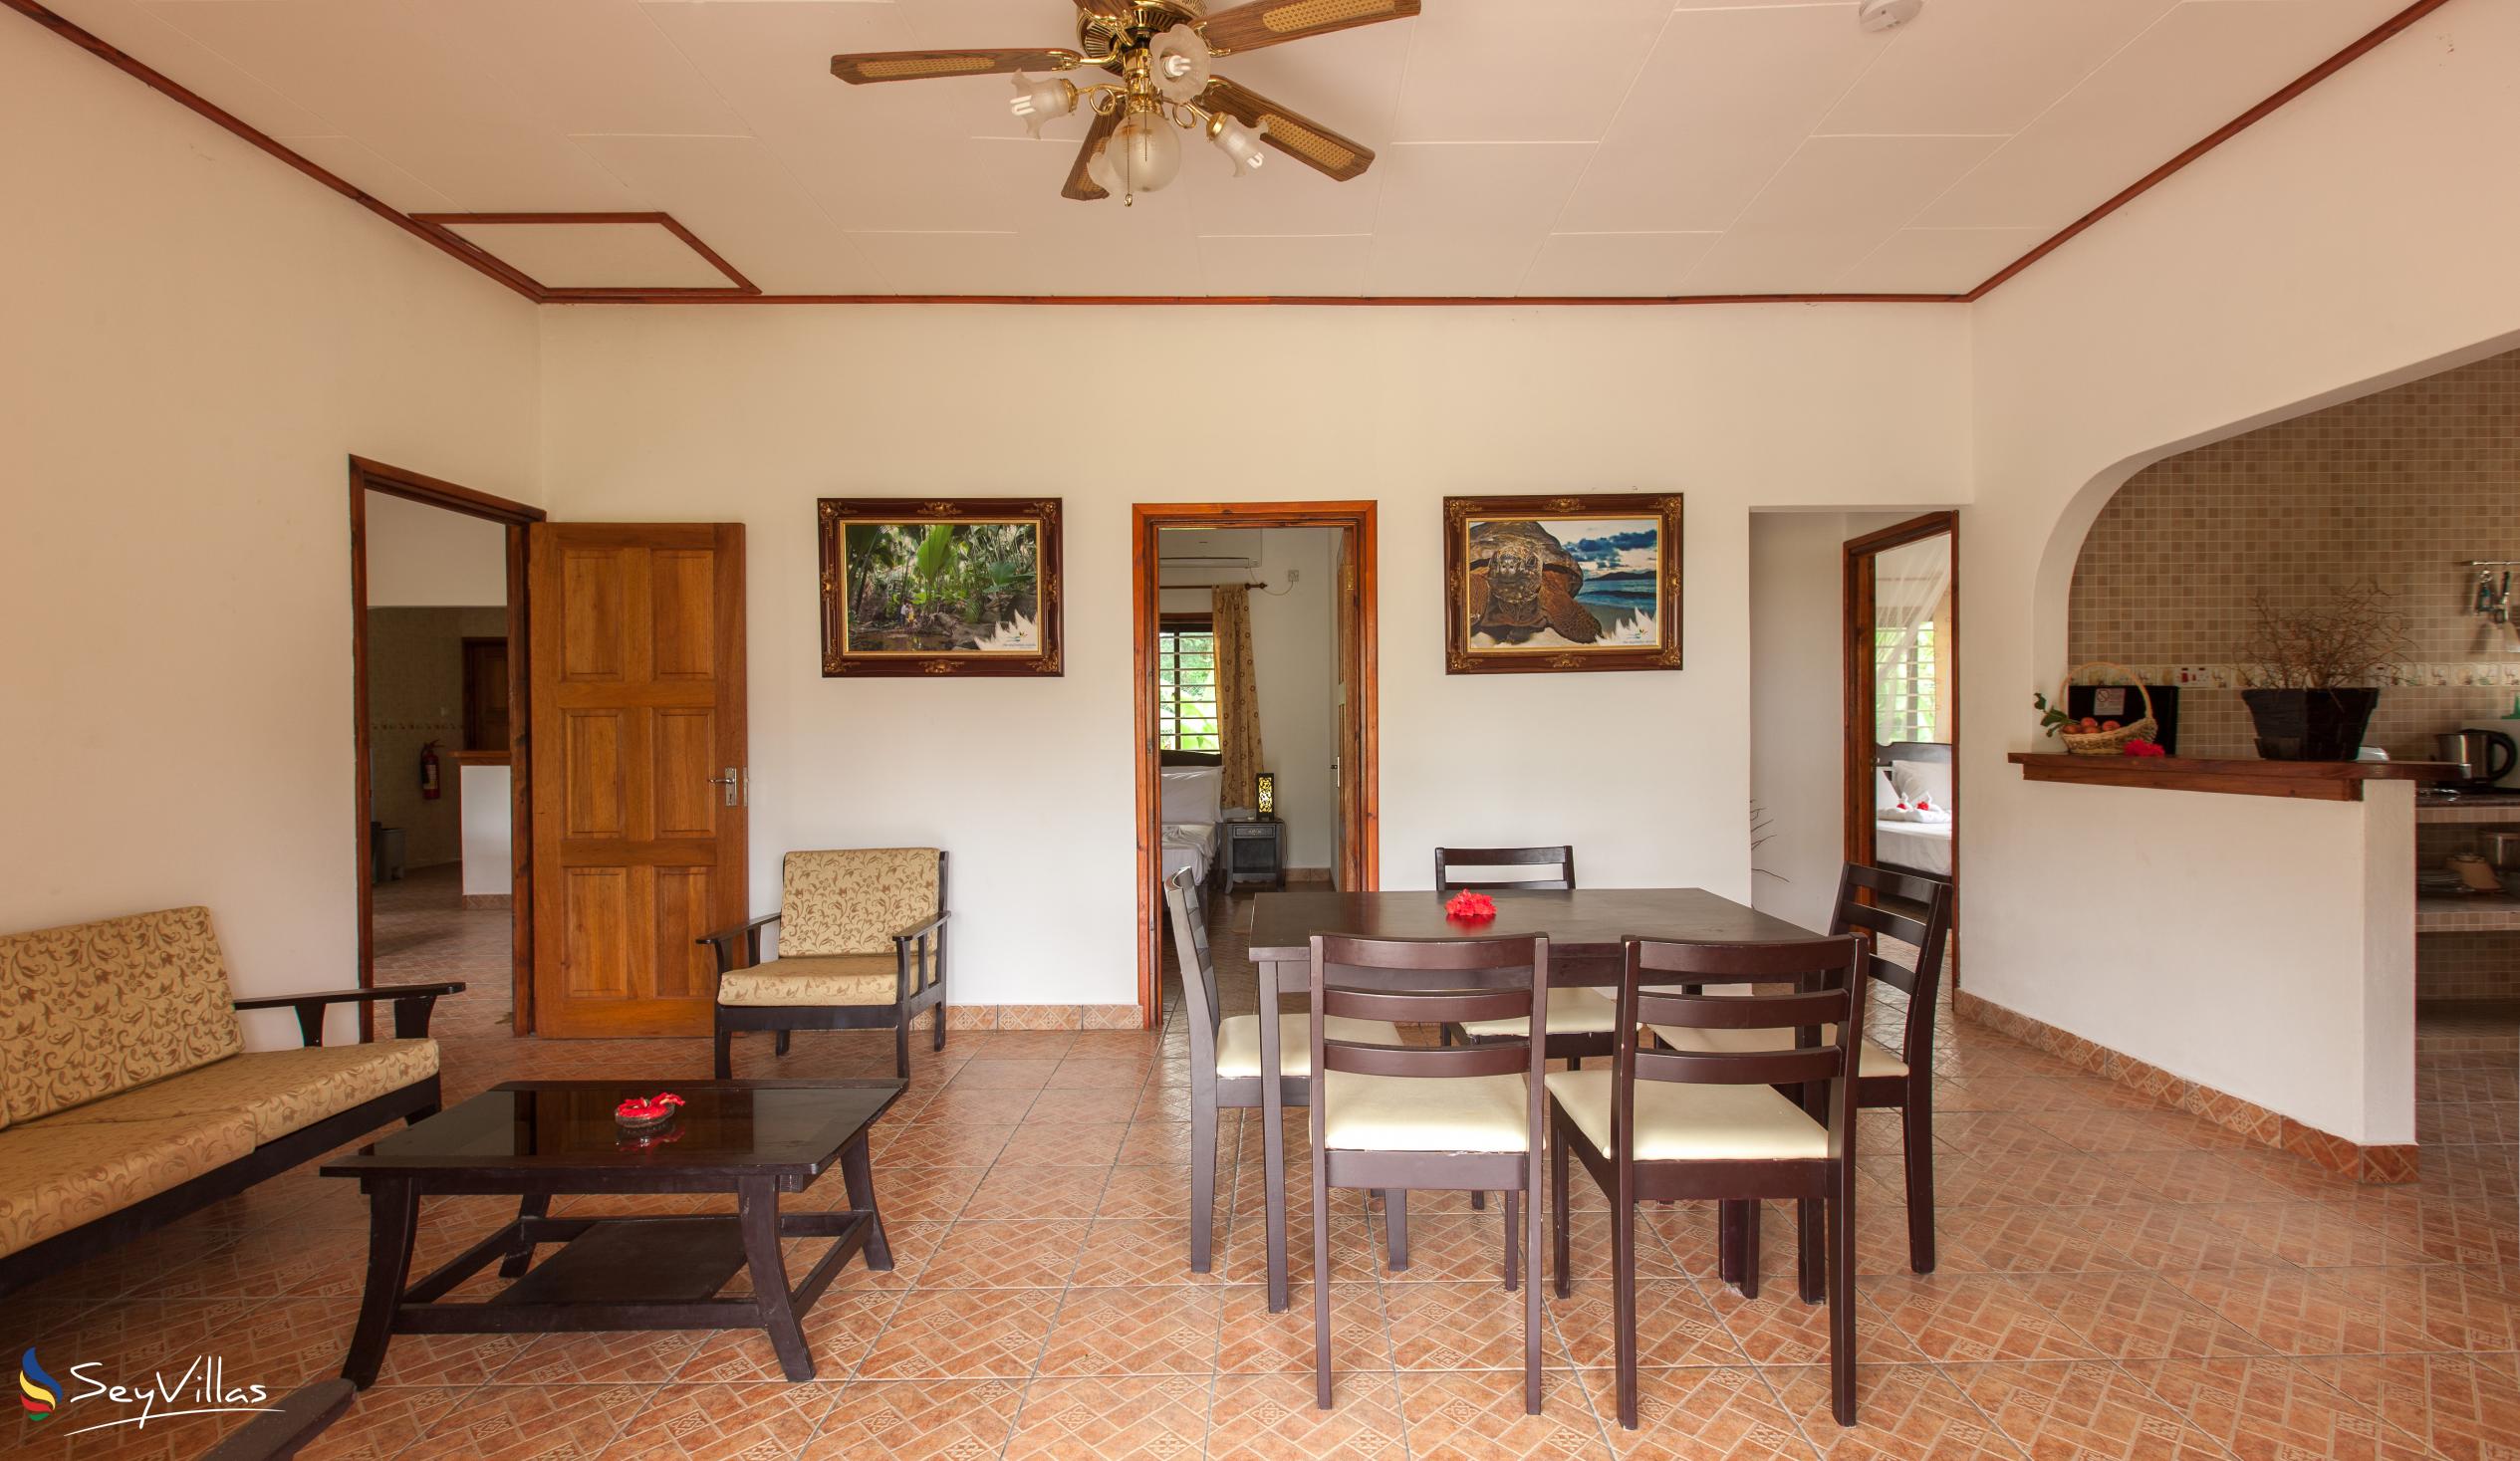 Foto 46: Zerof Self Catering  Apartments - Appartement à 3 chambres - La Digue (Seychelles)